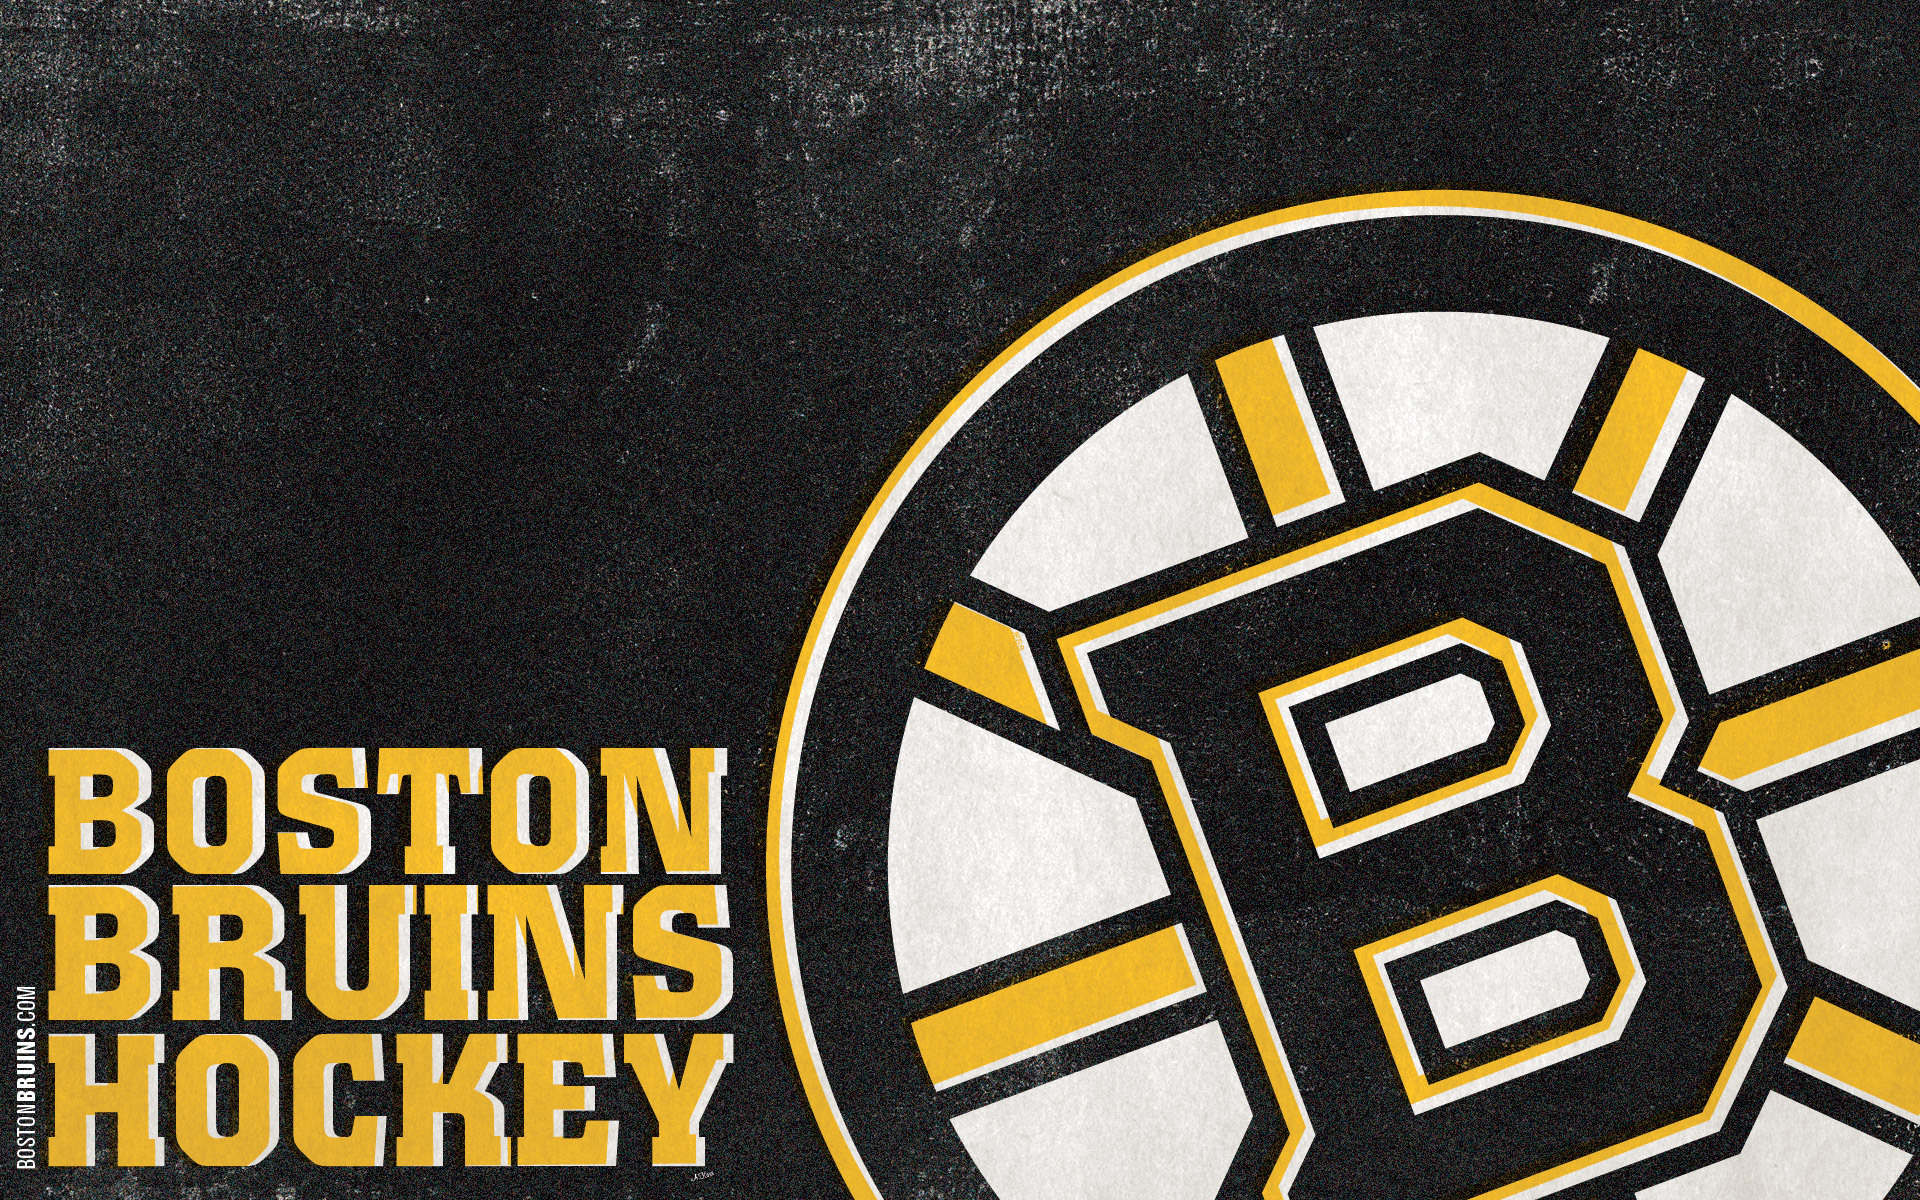 Boston Bruins Image Logo HD Wallpaper And Background Photos